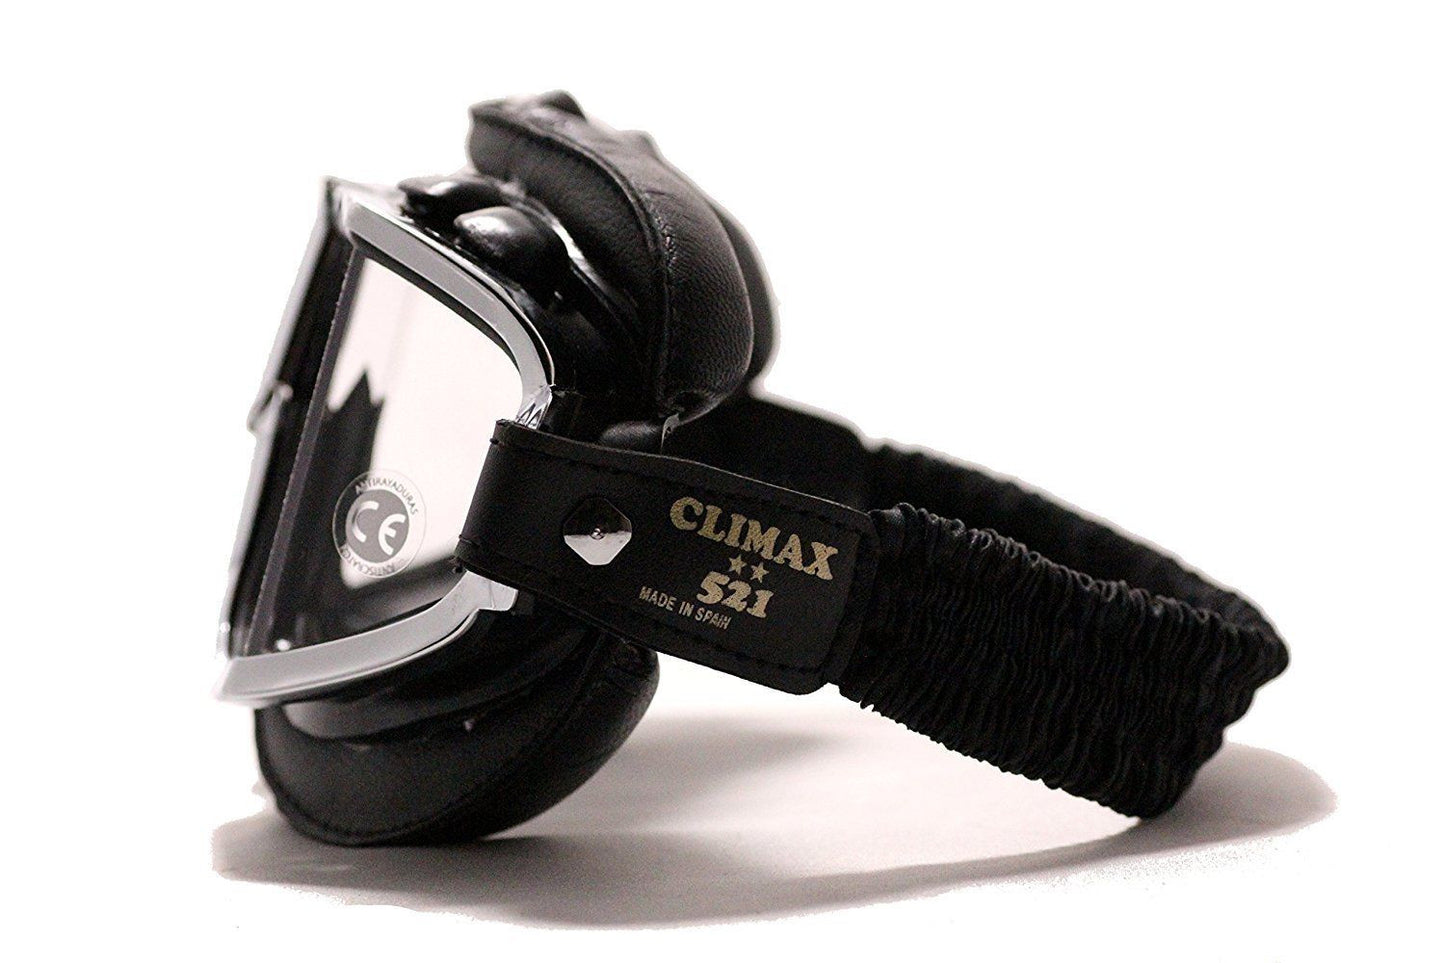 Gafas Clasicas Moto Tipo Aviador Climax Custom 521 Googles fabriqués en Espagne